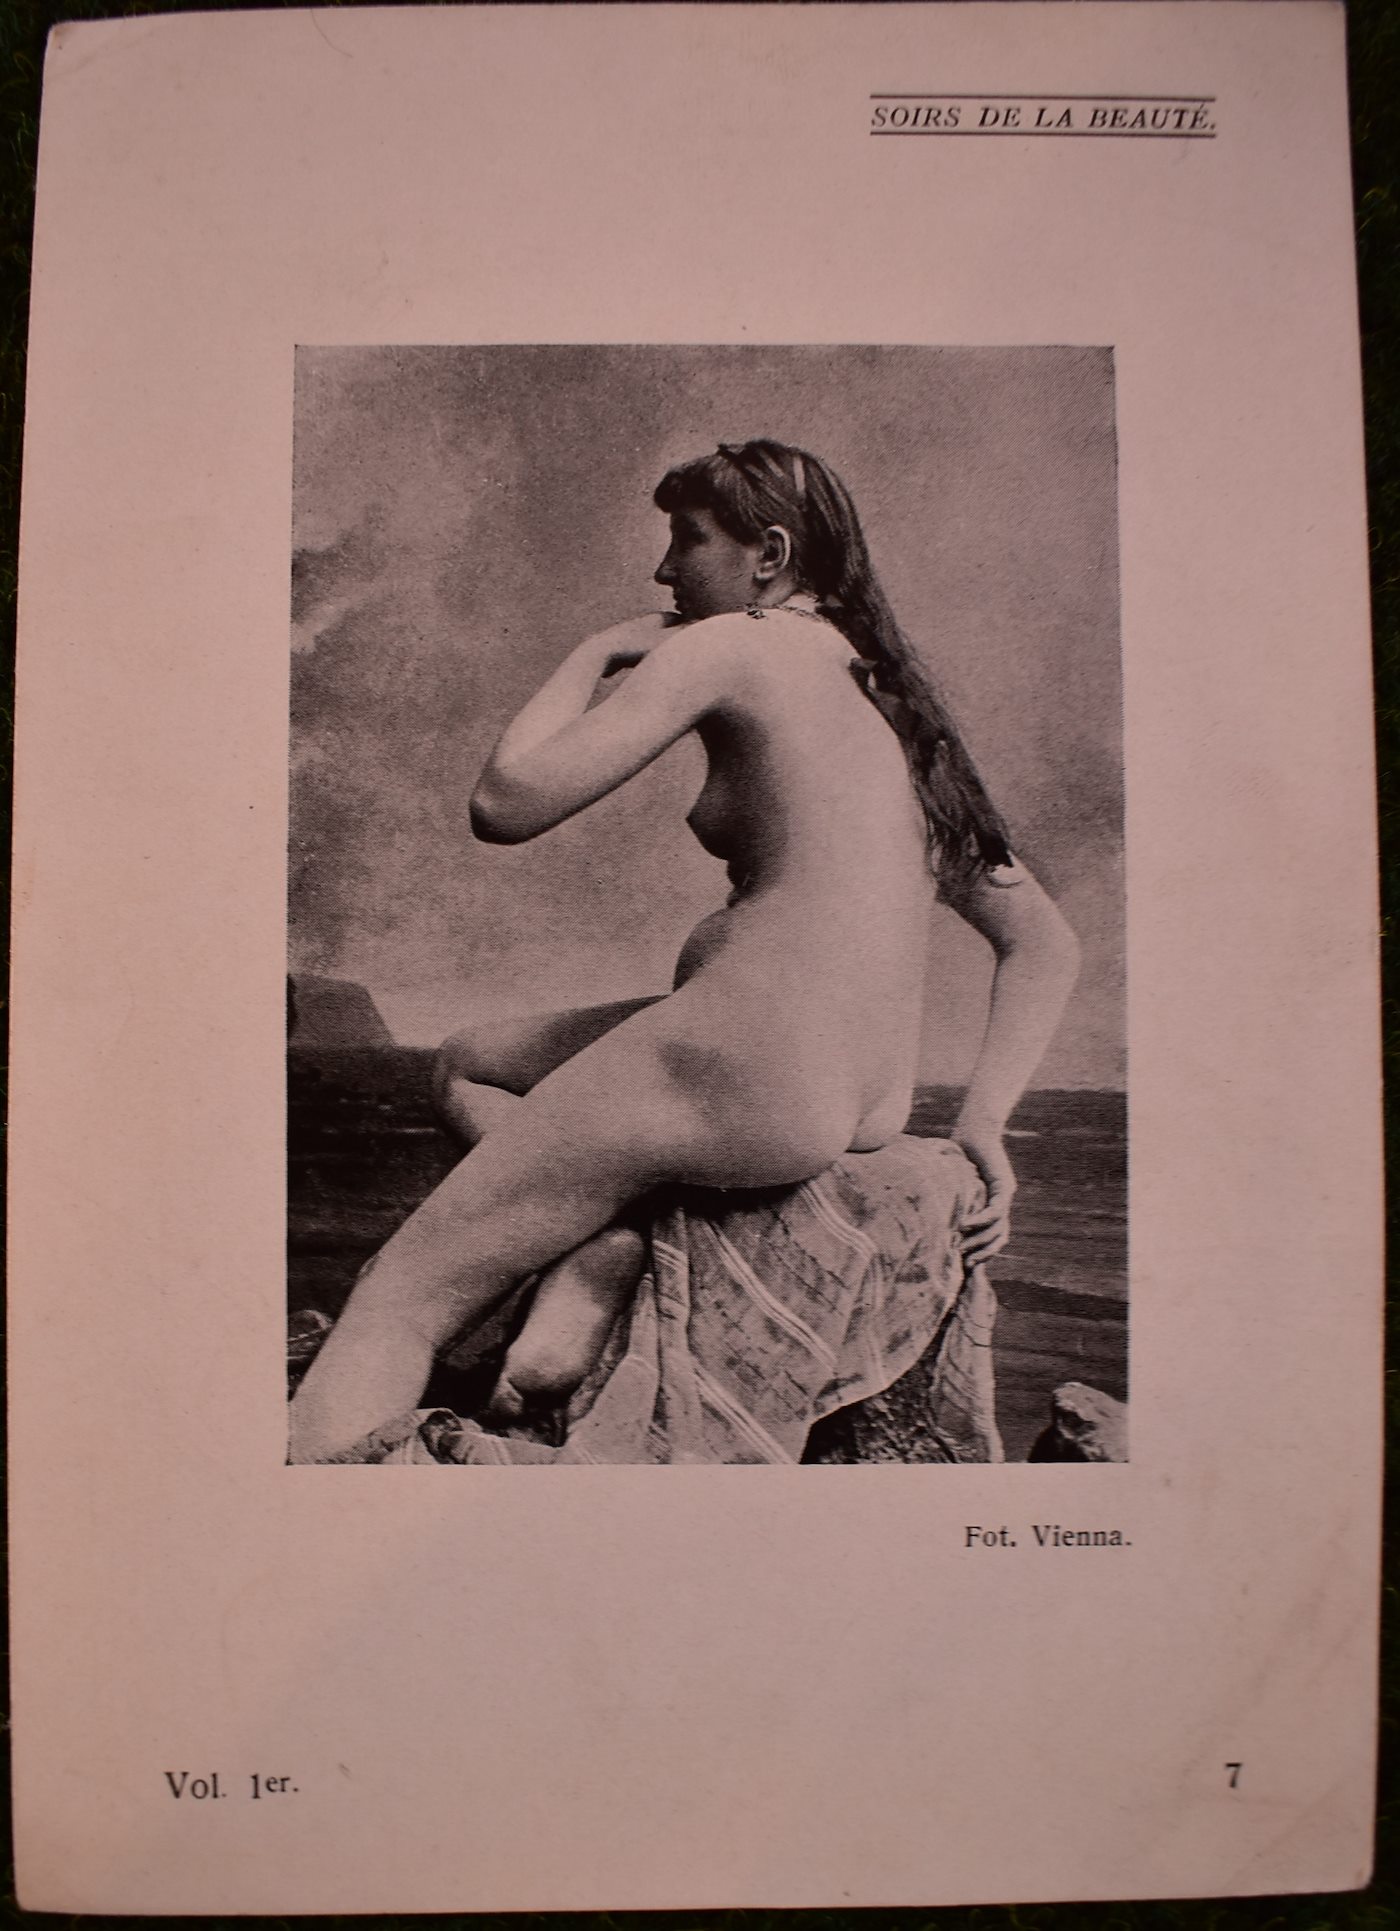 . - Soubor 19 erotických ex libris a 6 fotografií